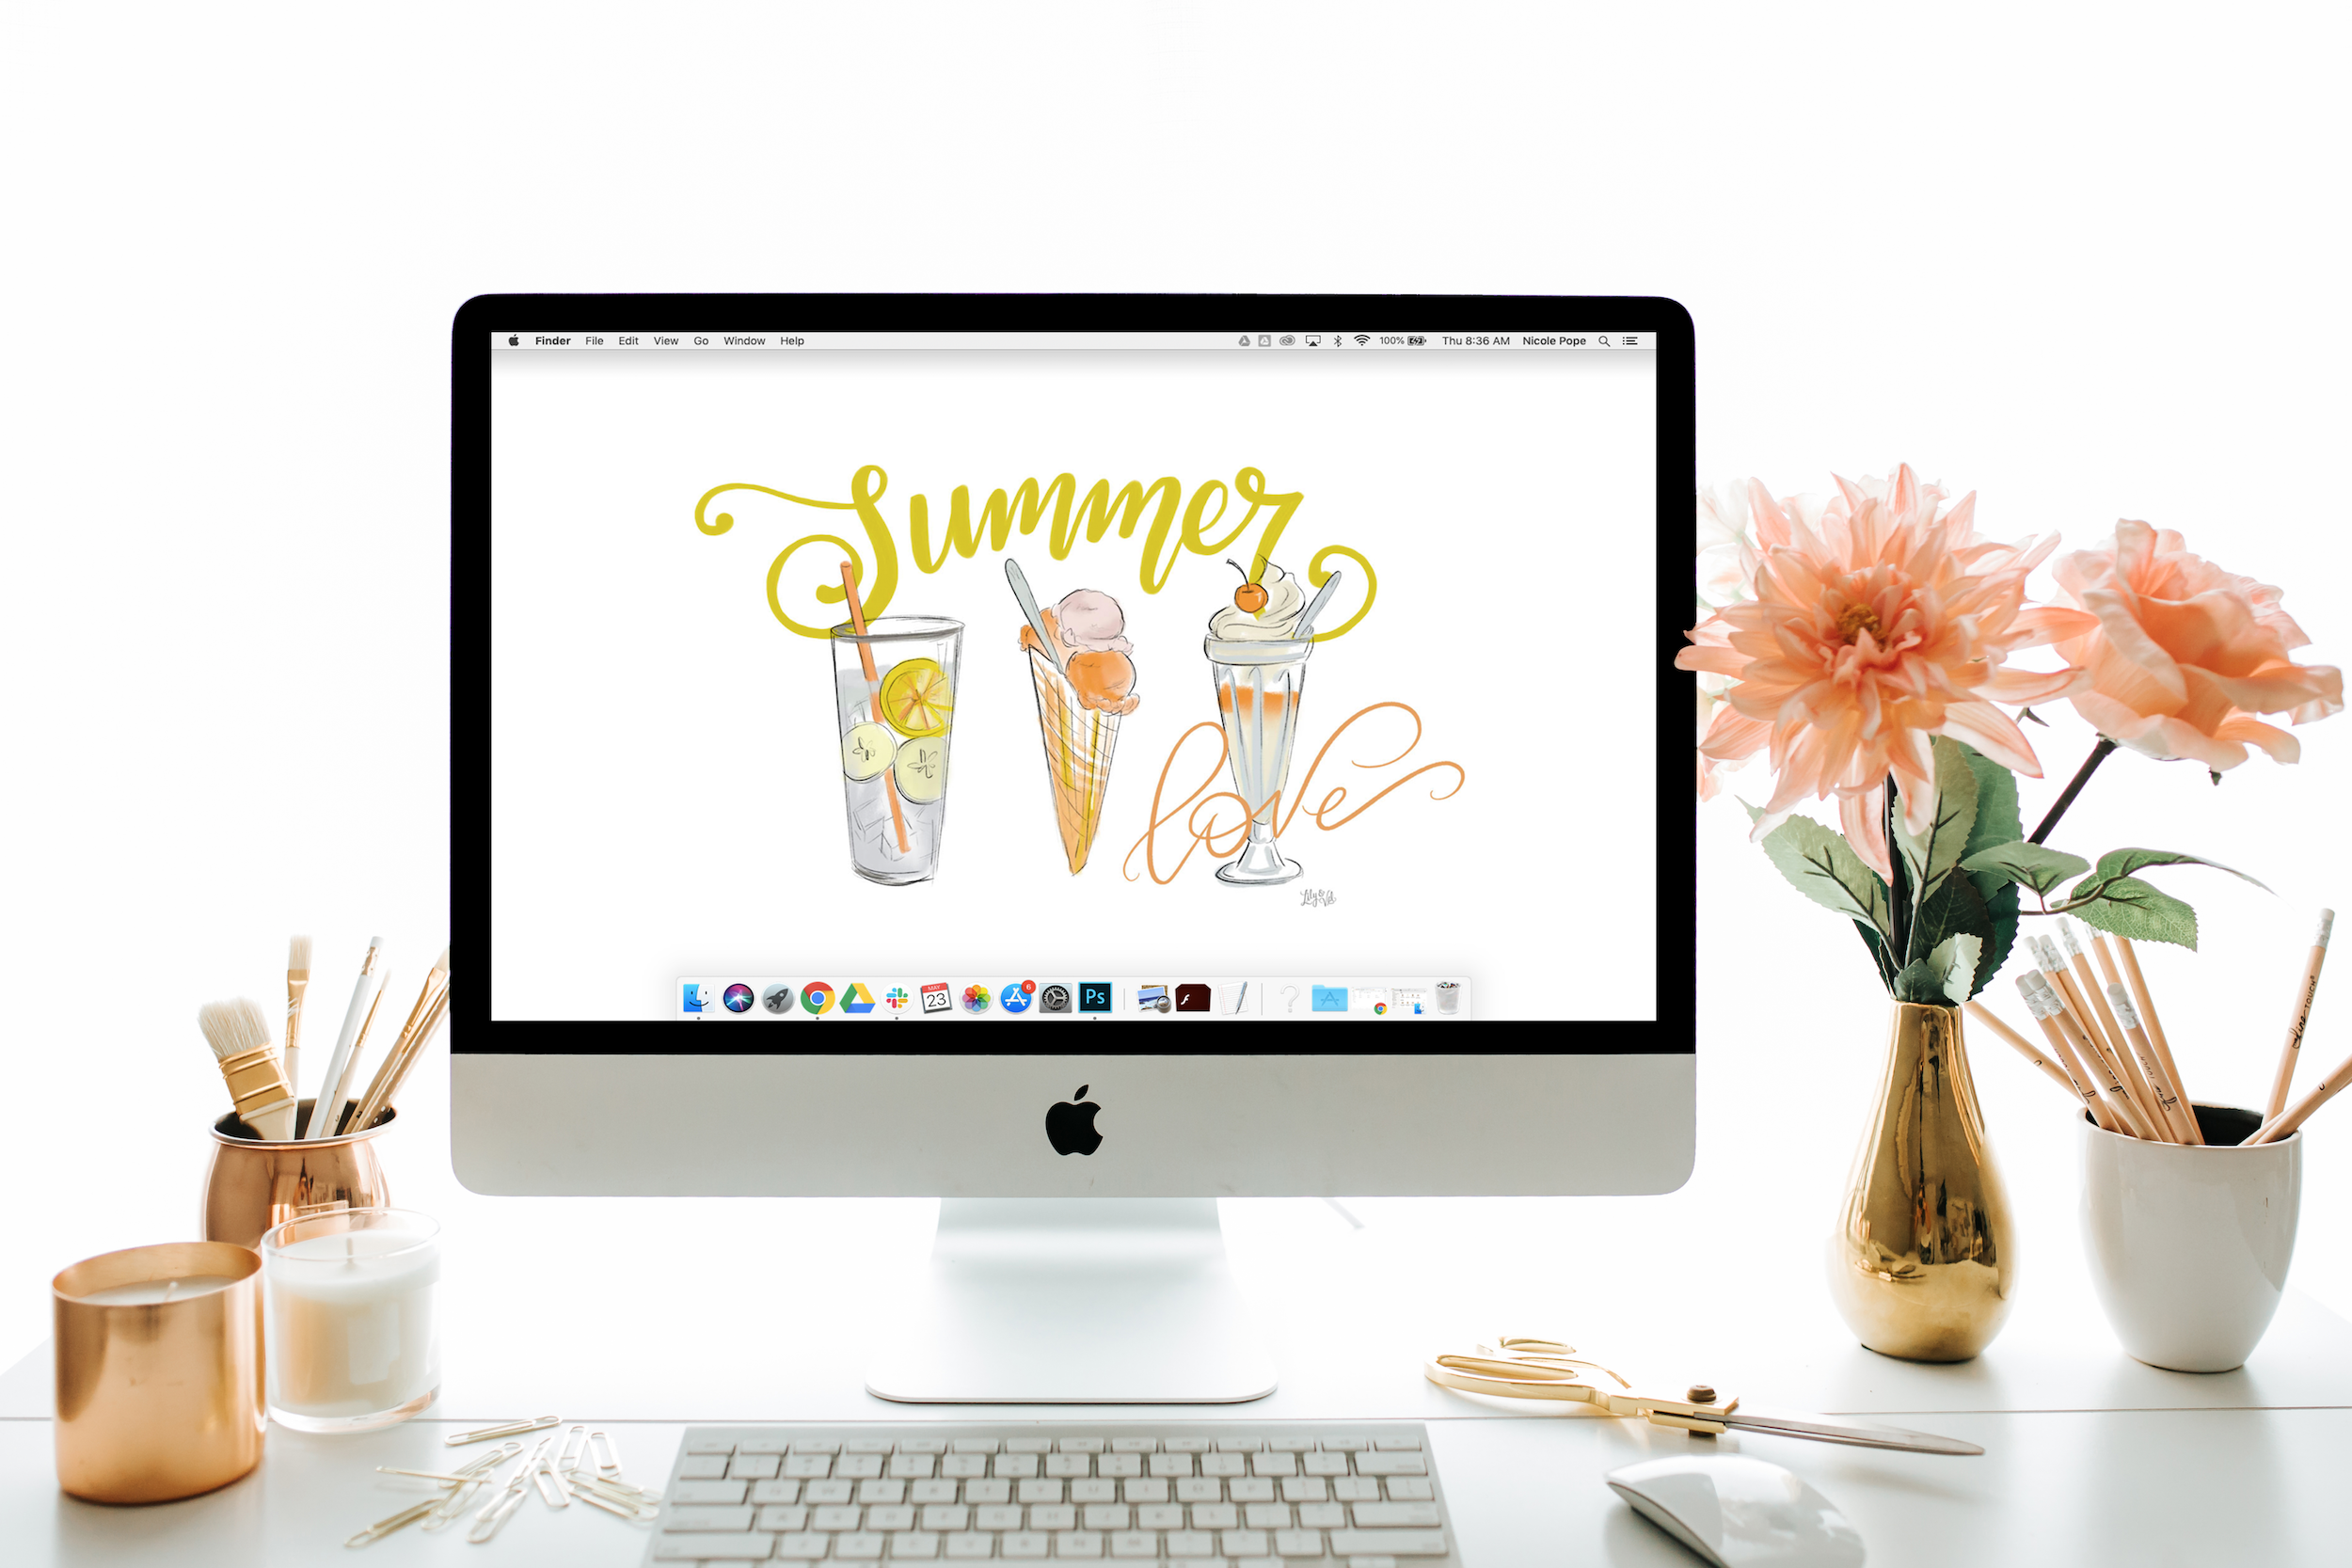 July's "Summer Love" FREE Desktop Download